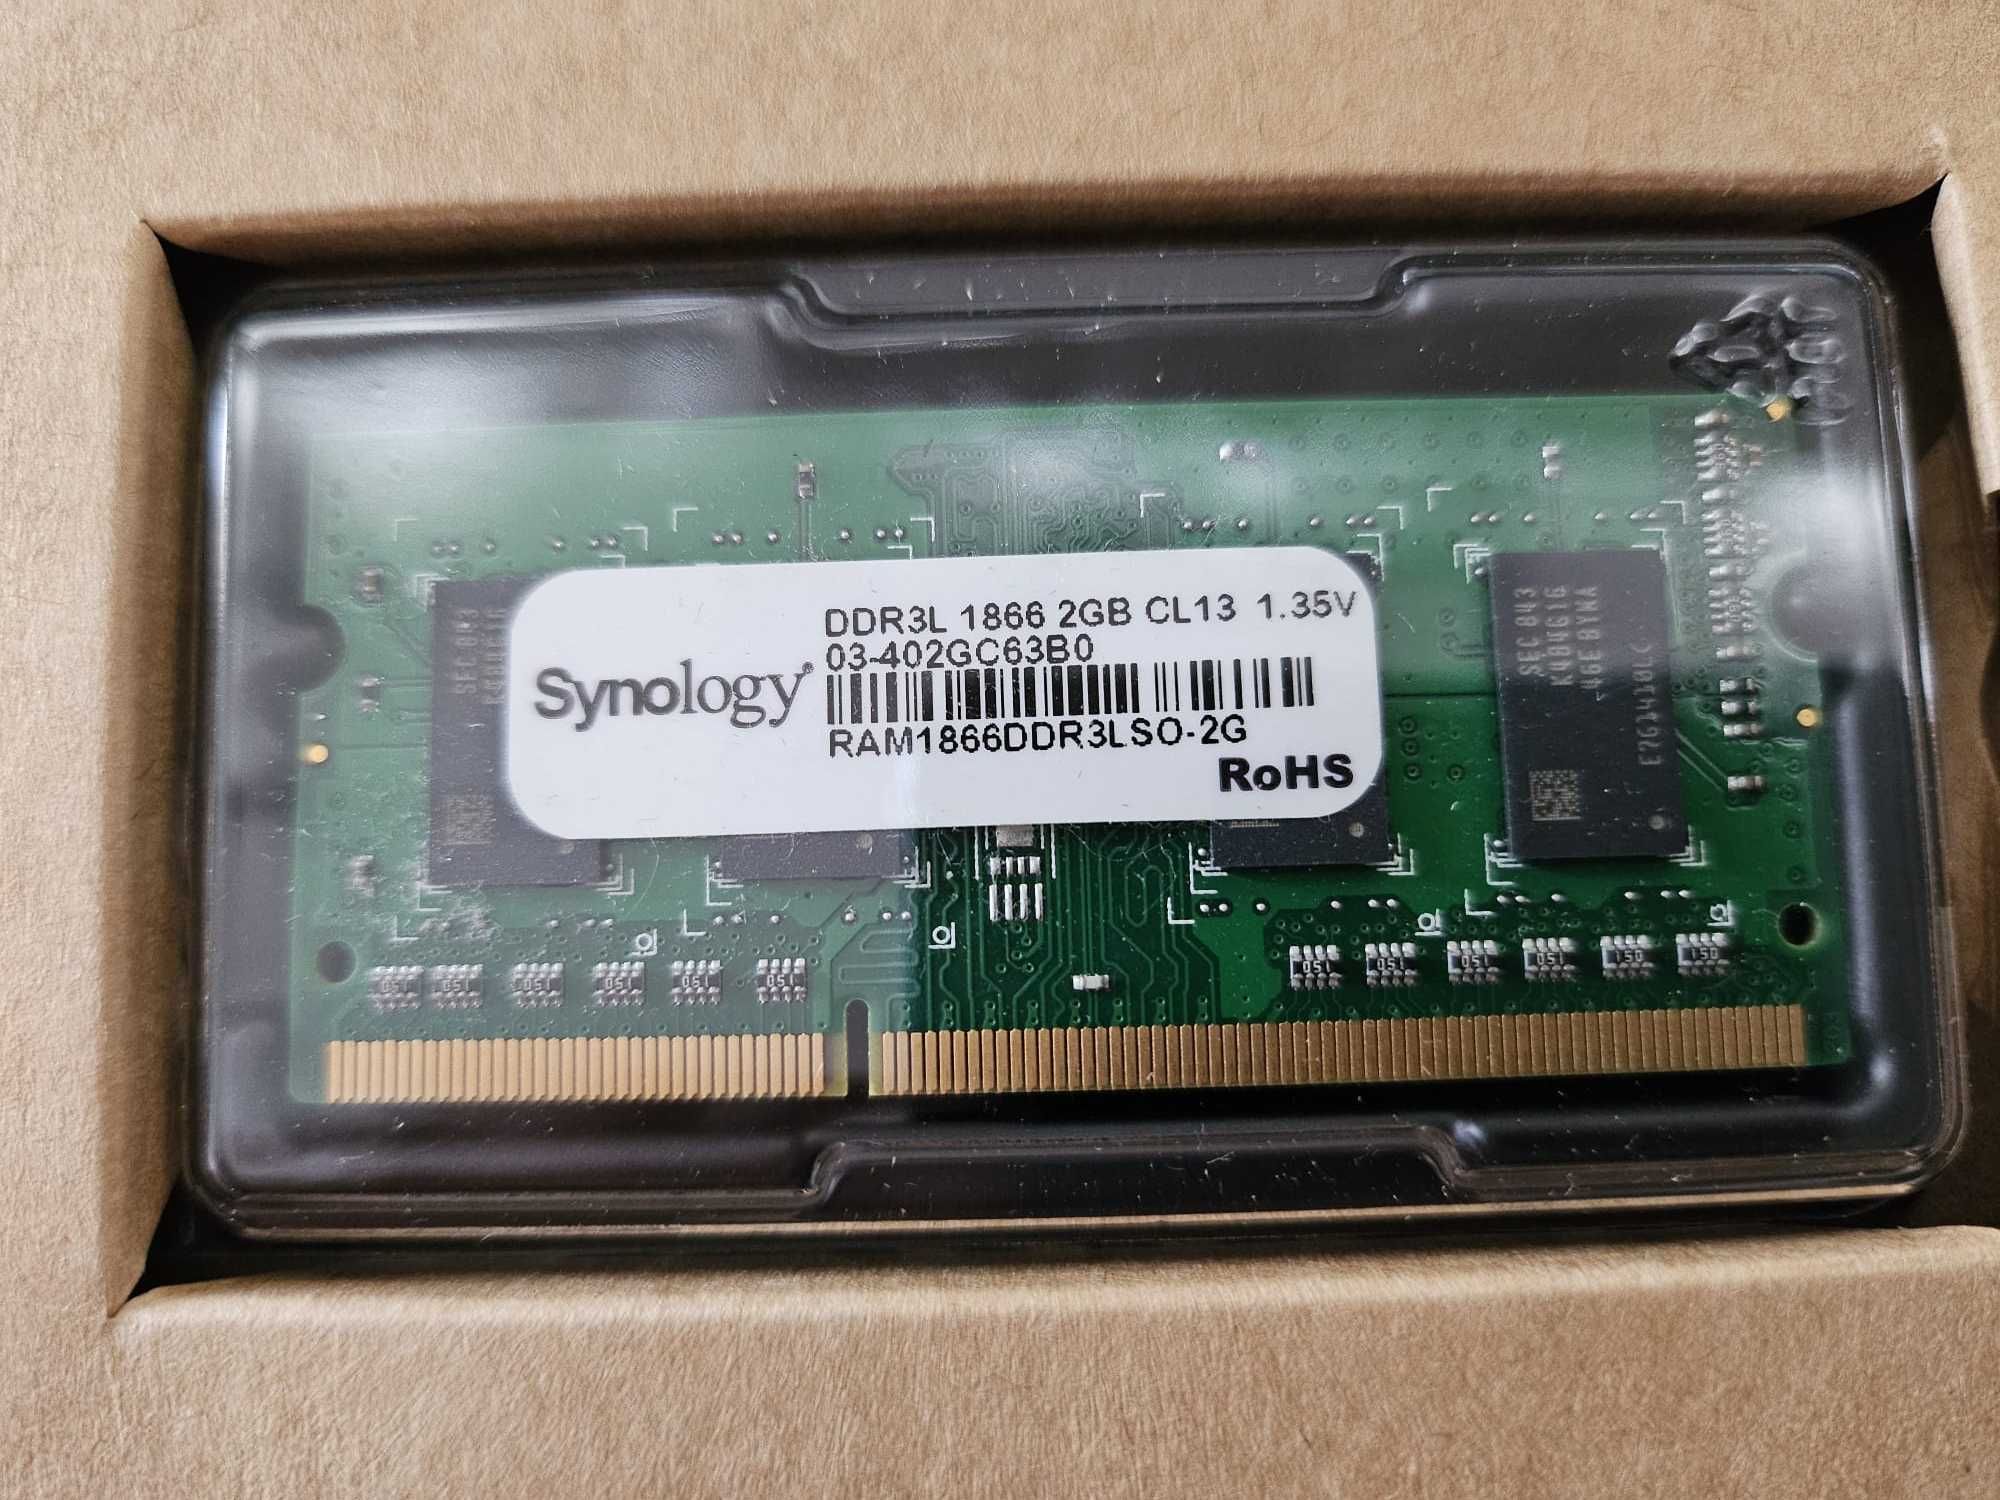 Synology NAS DDR3L 1866 2GB 03-402GC63B0